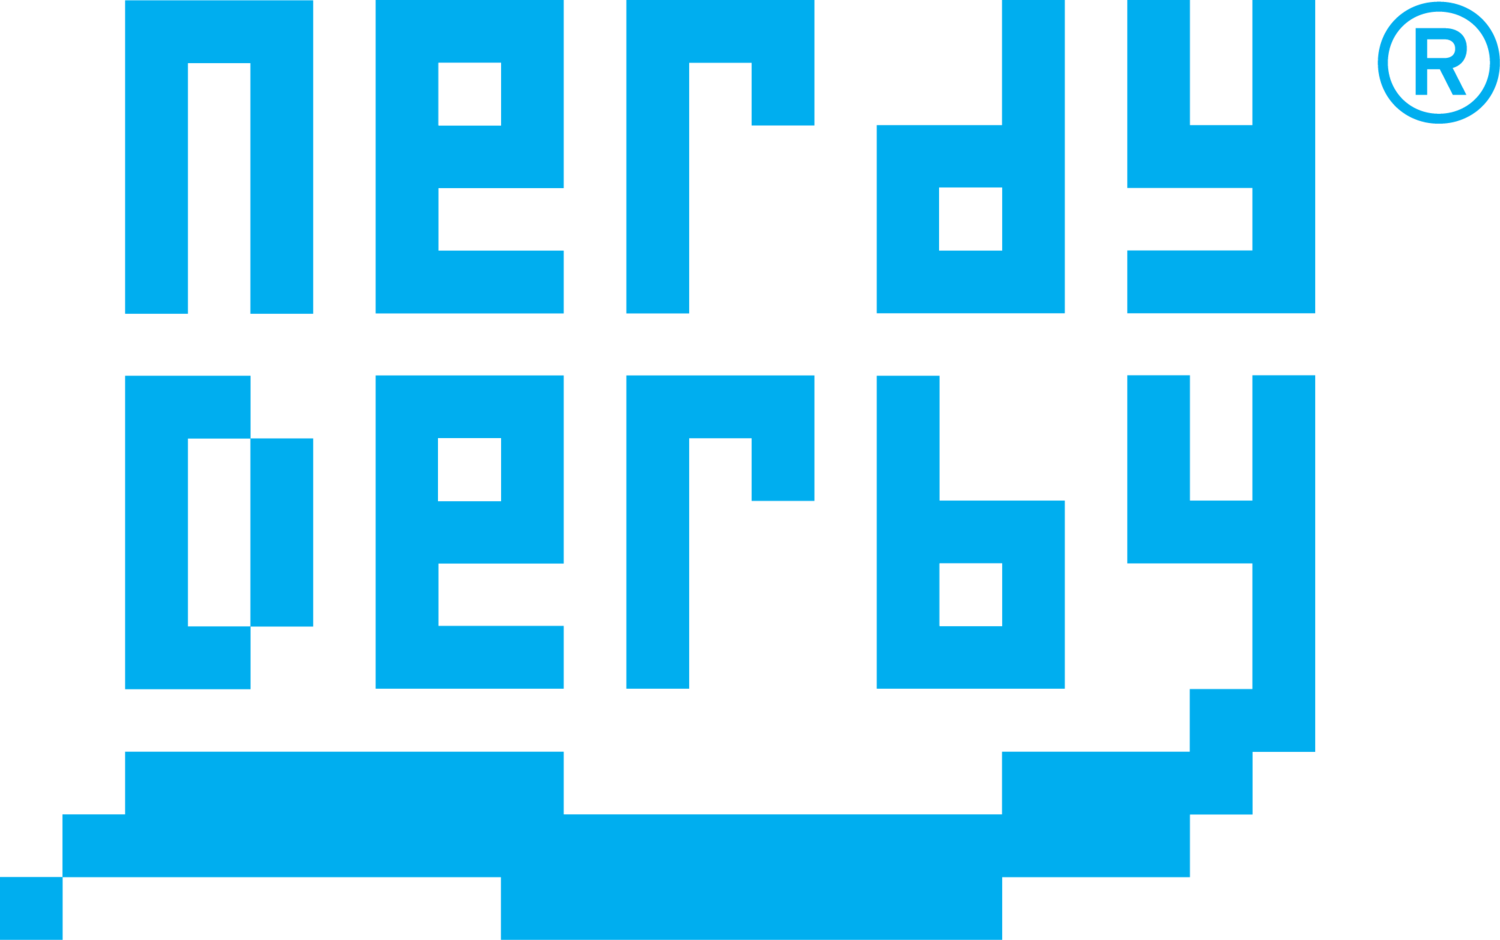 Nerdy Derby